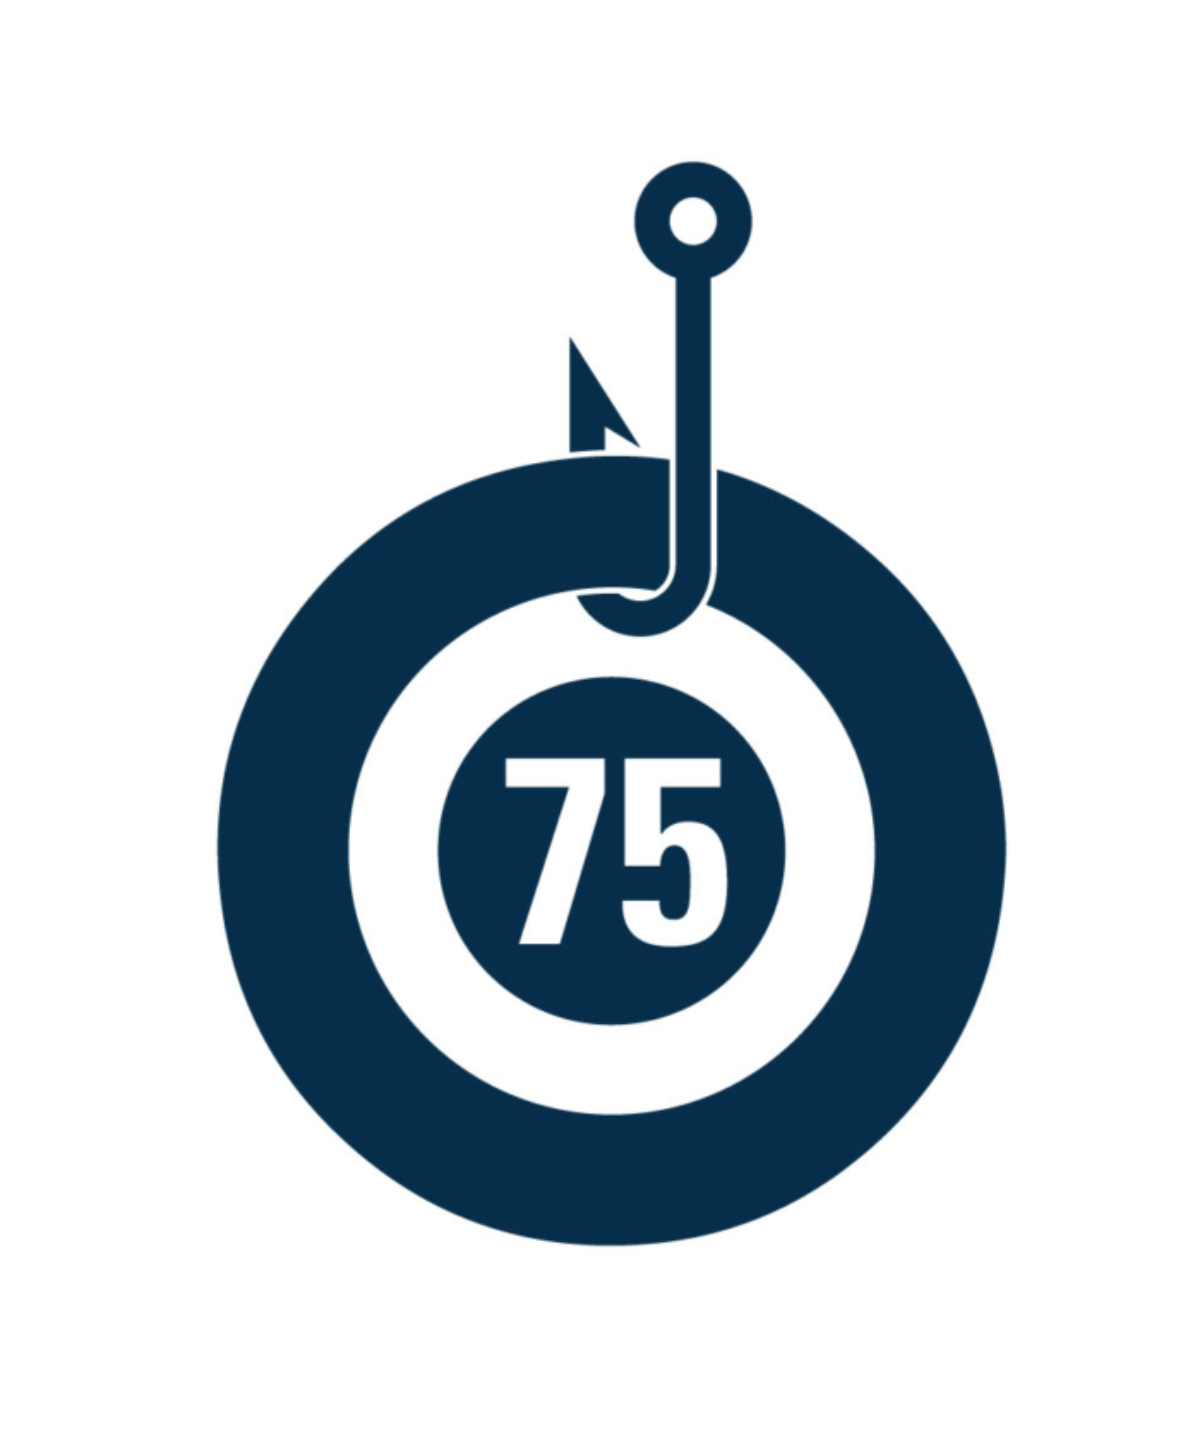 T75 logo